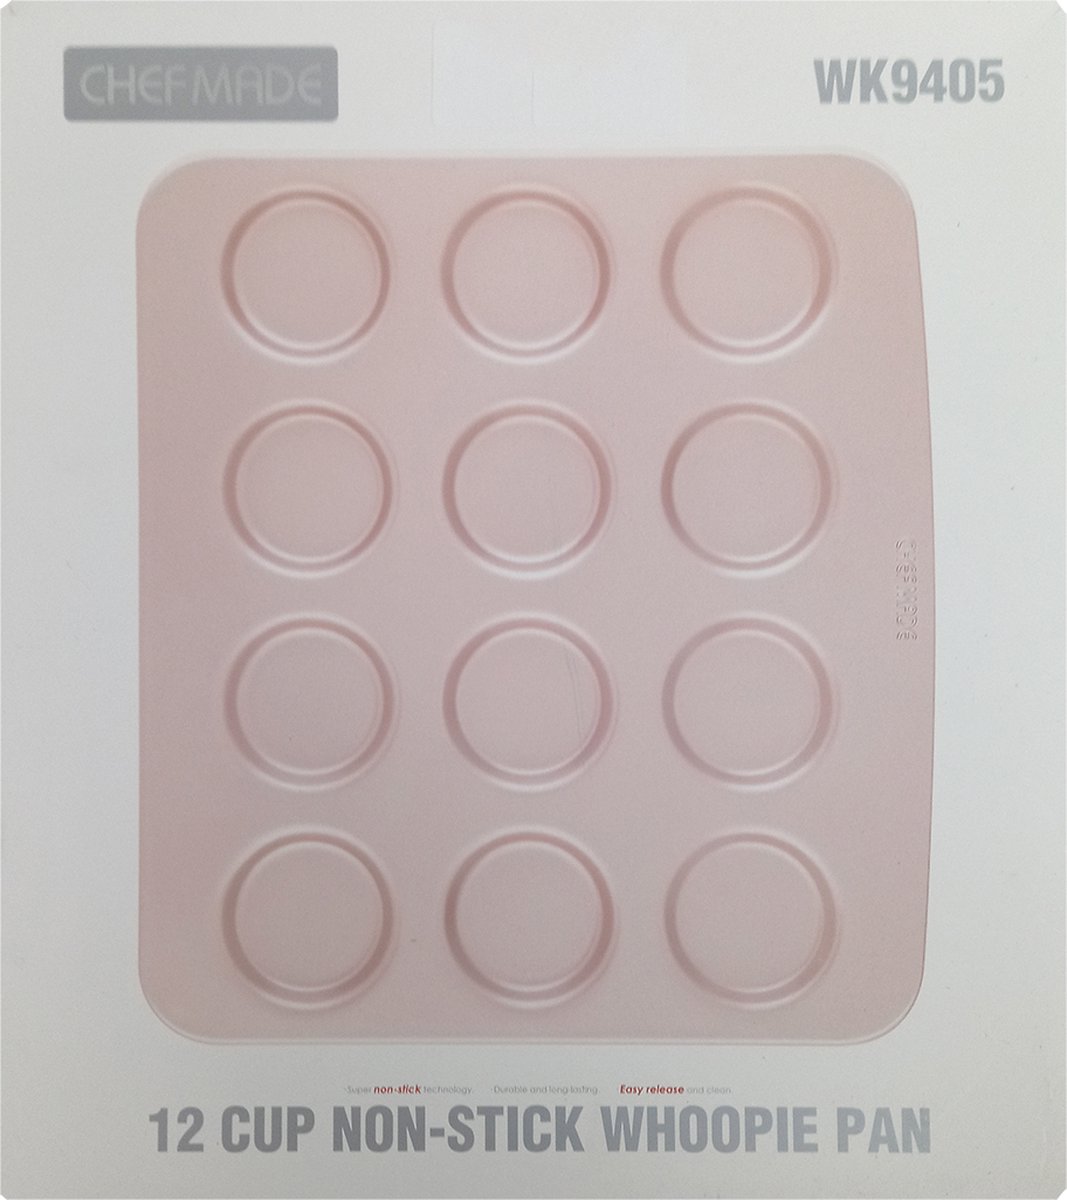 Bakvorm voor whoopies - anti aanbaklaag - champagnekleurig metaal - voor 12 whoopies - 29 x 32.6 cm